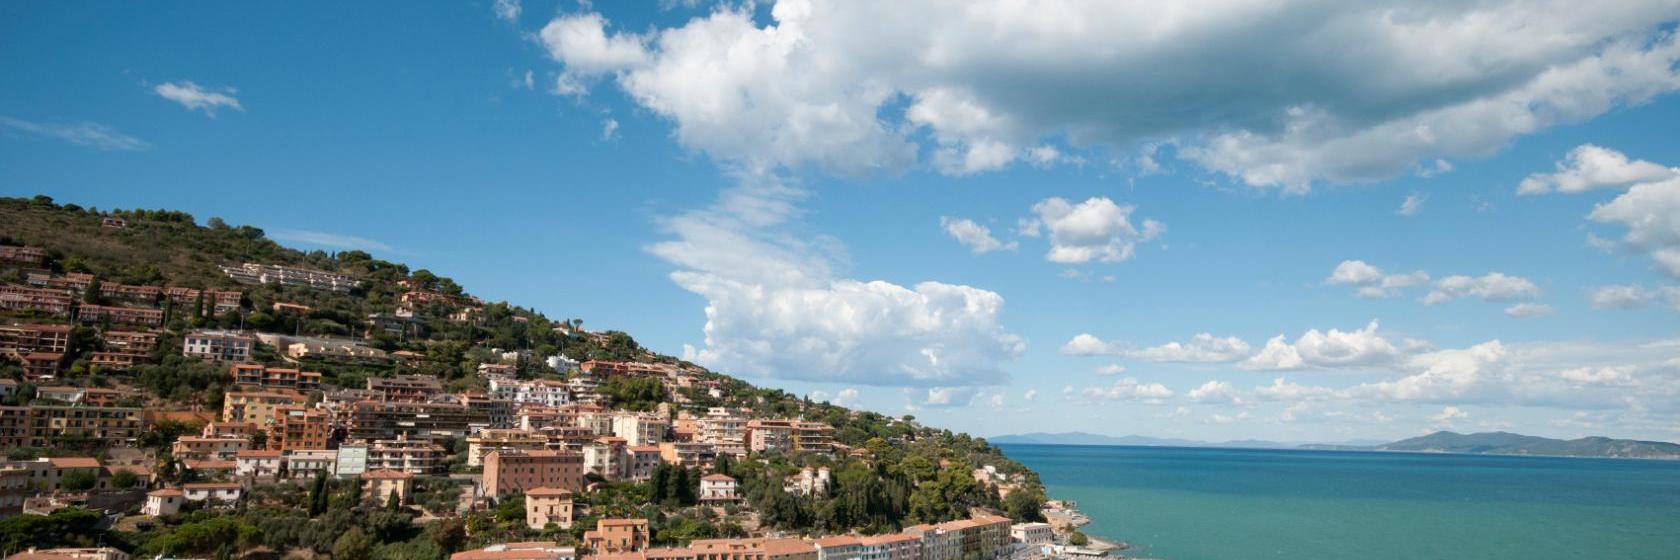 10 Best Porto Santo Stefano Hotels, Italy (From $77)